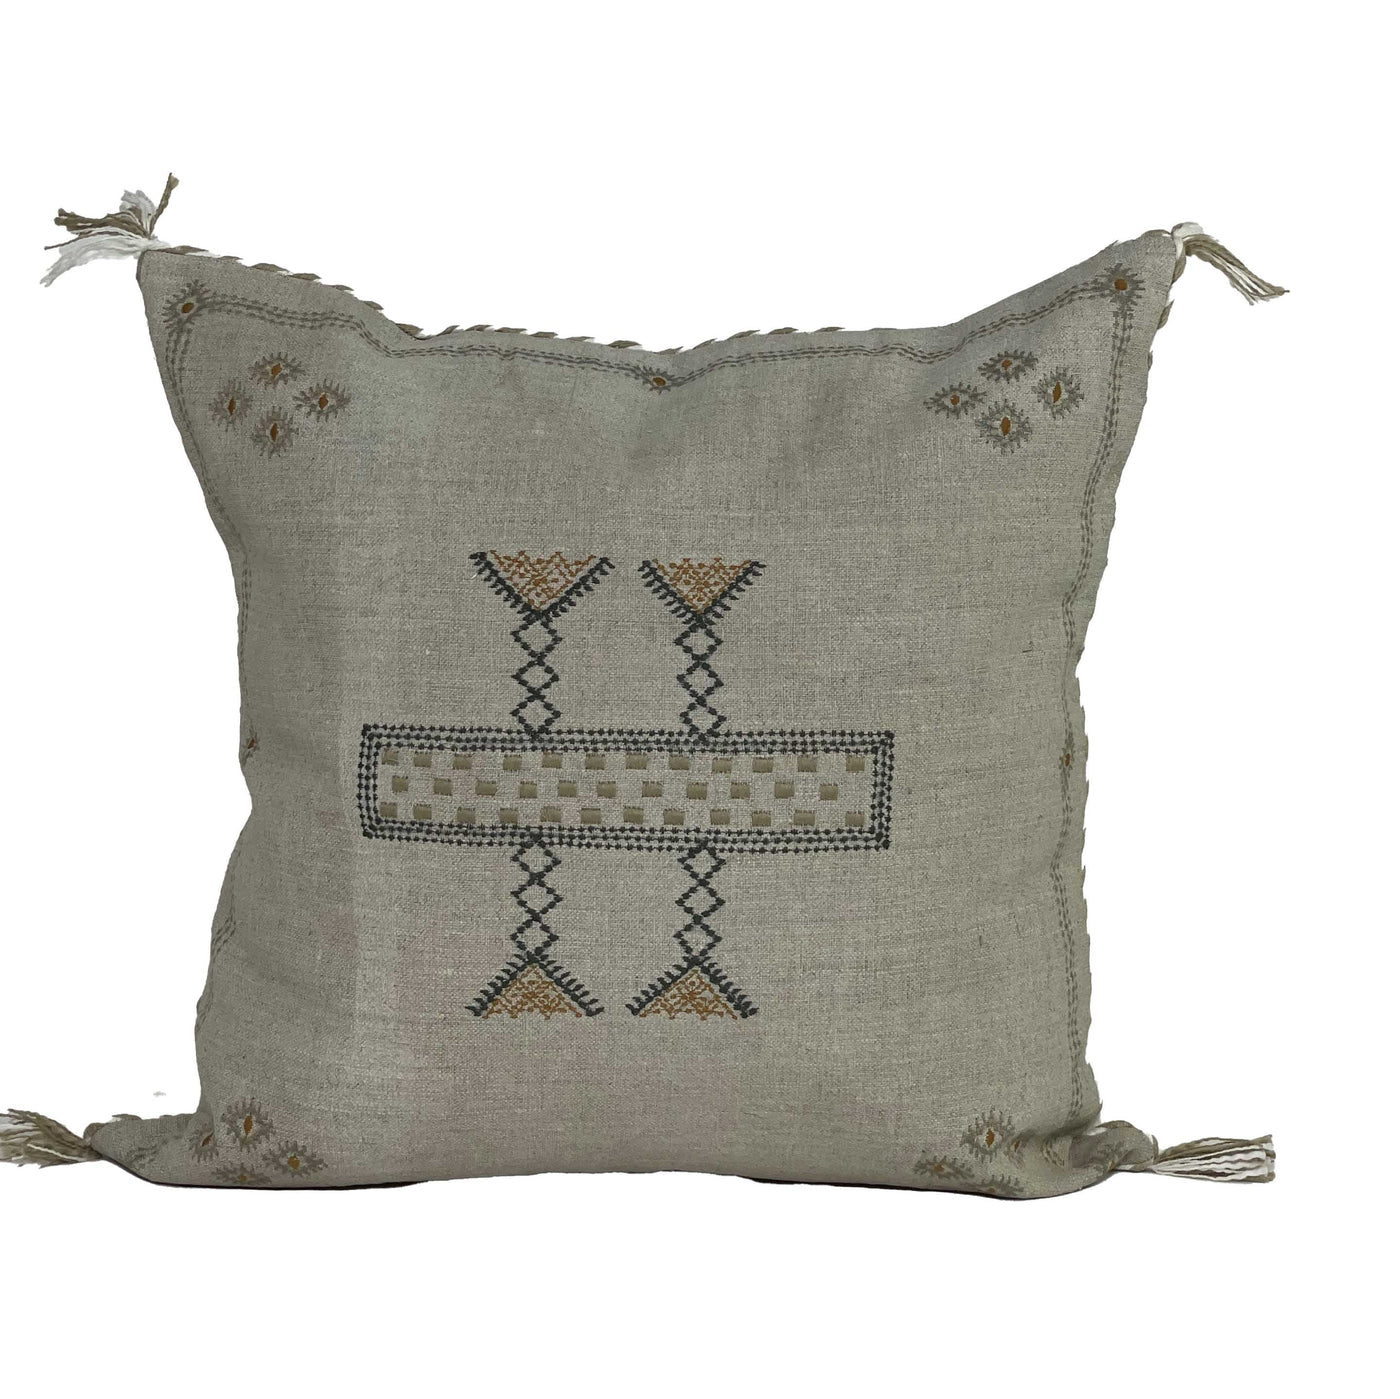 MANOJ - Desginer Pillows Handmade Decorative Accent Throw Pillow Covers